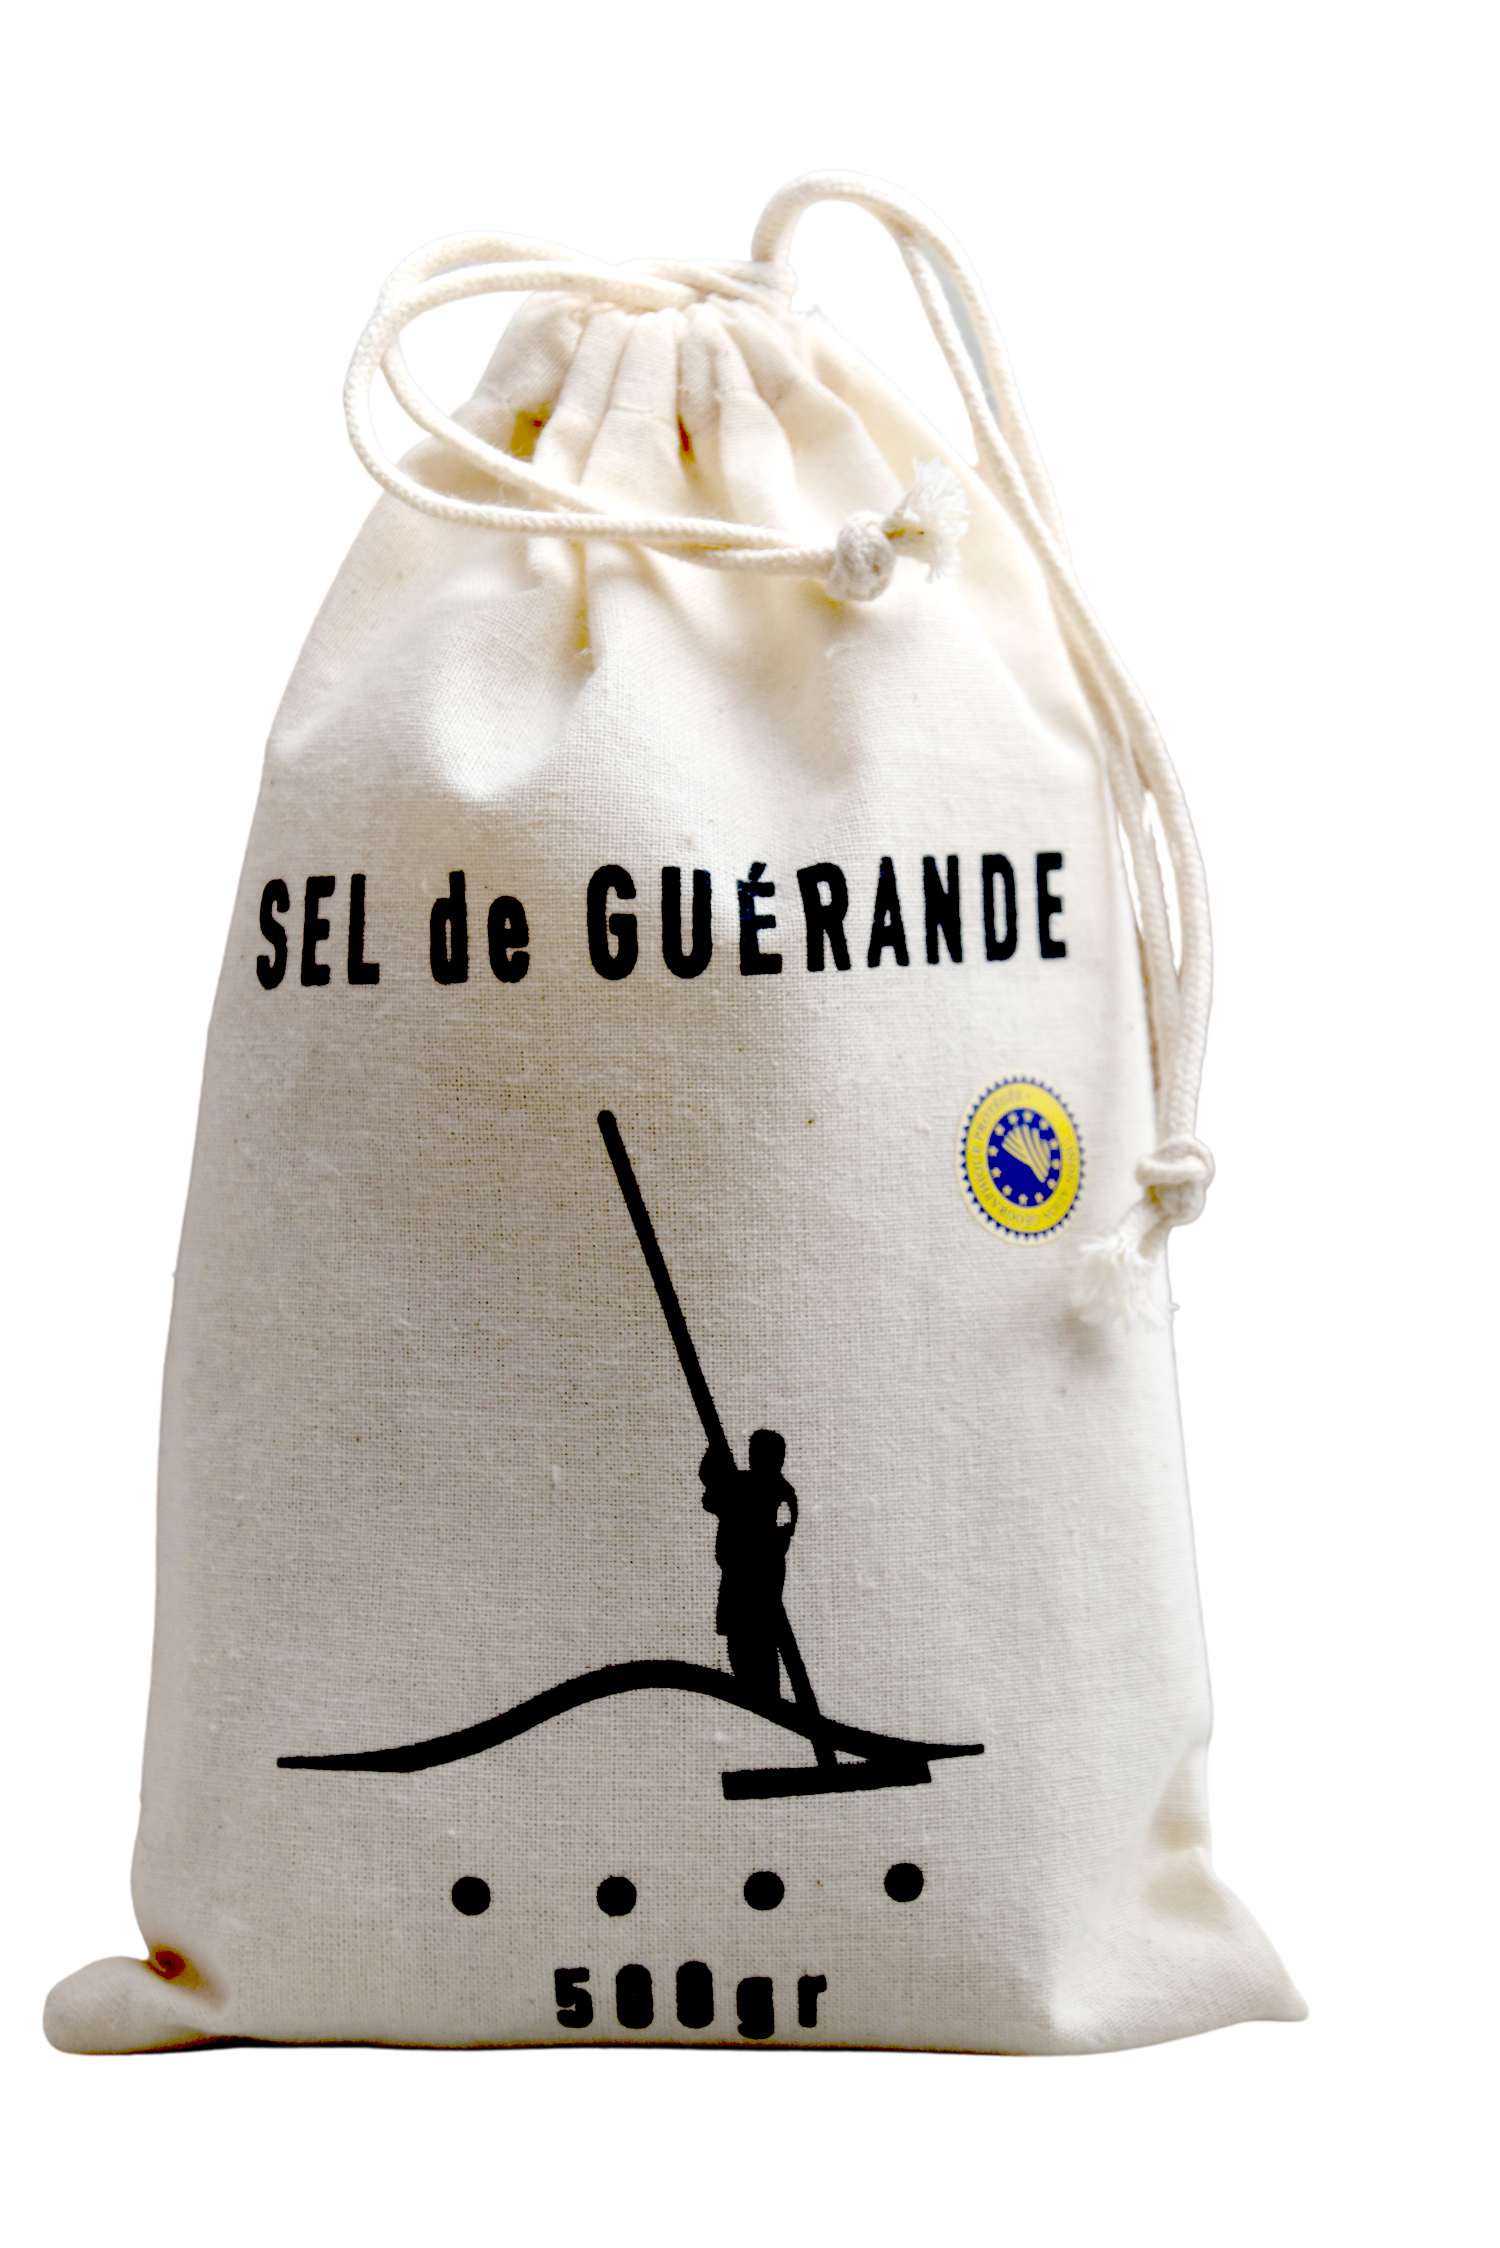 Season and Stir™ Fine Guérande Salt in cotton printed bag